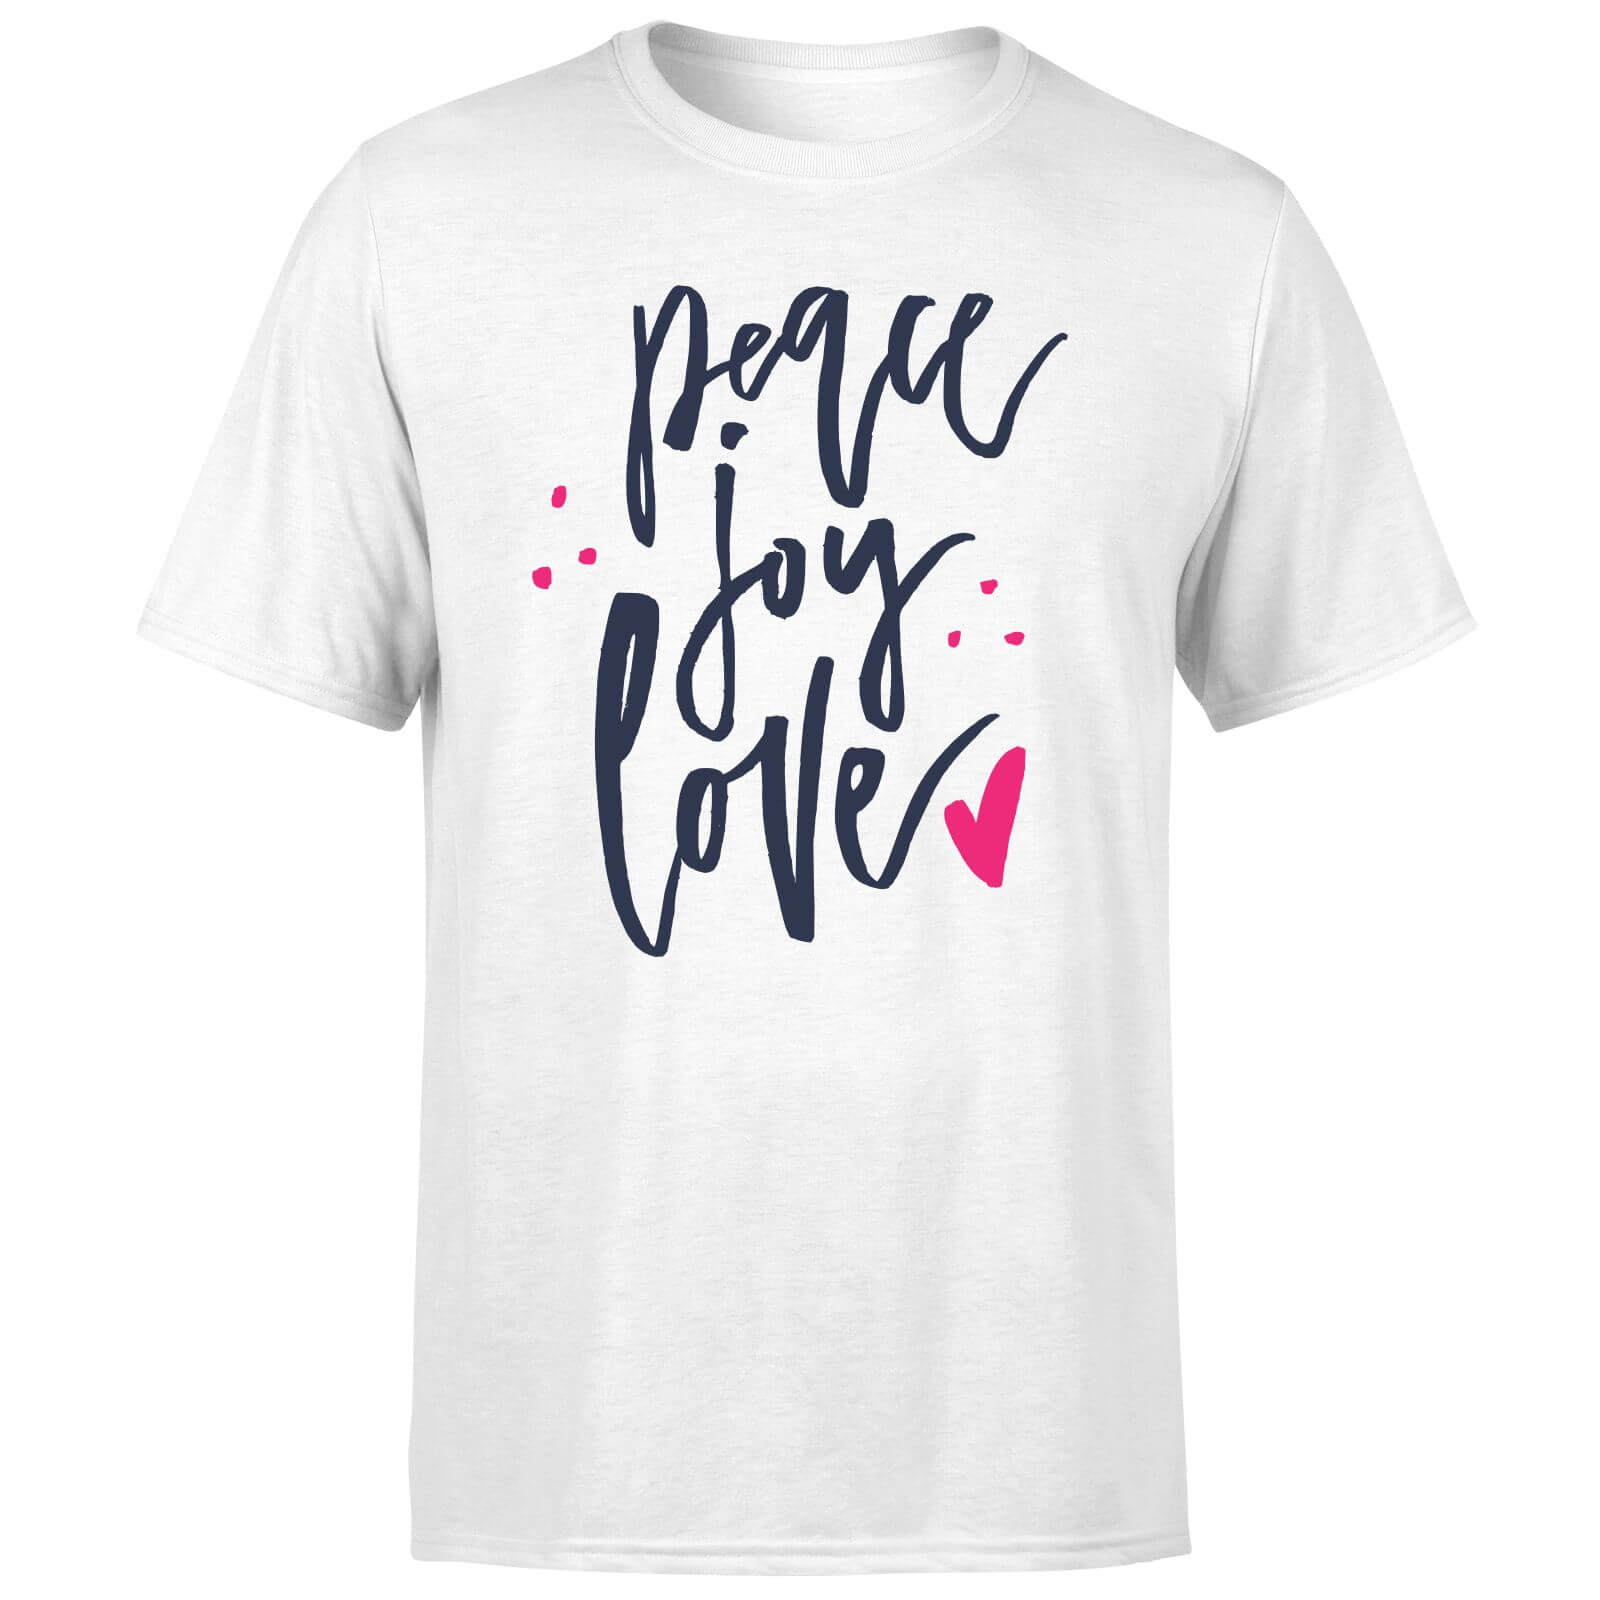 Peace Joy Love T-Shirt - White - S - White